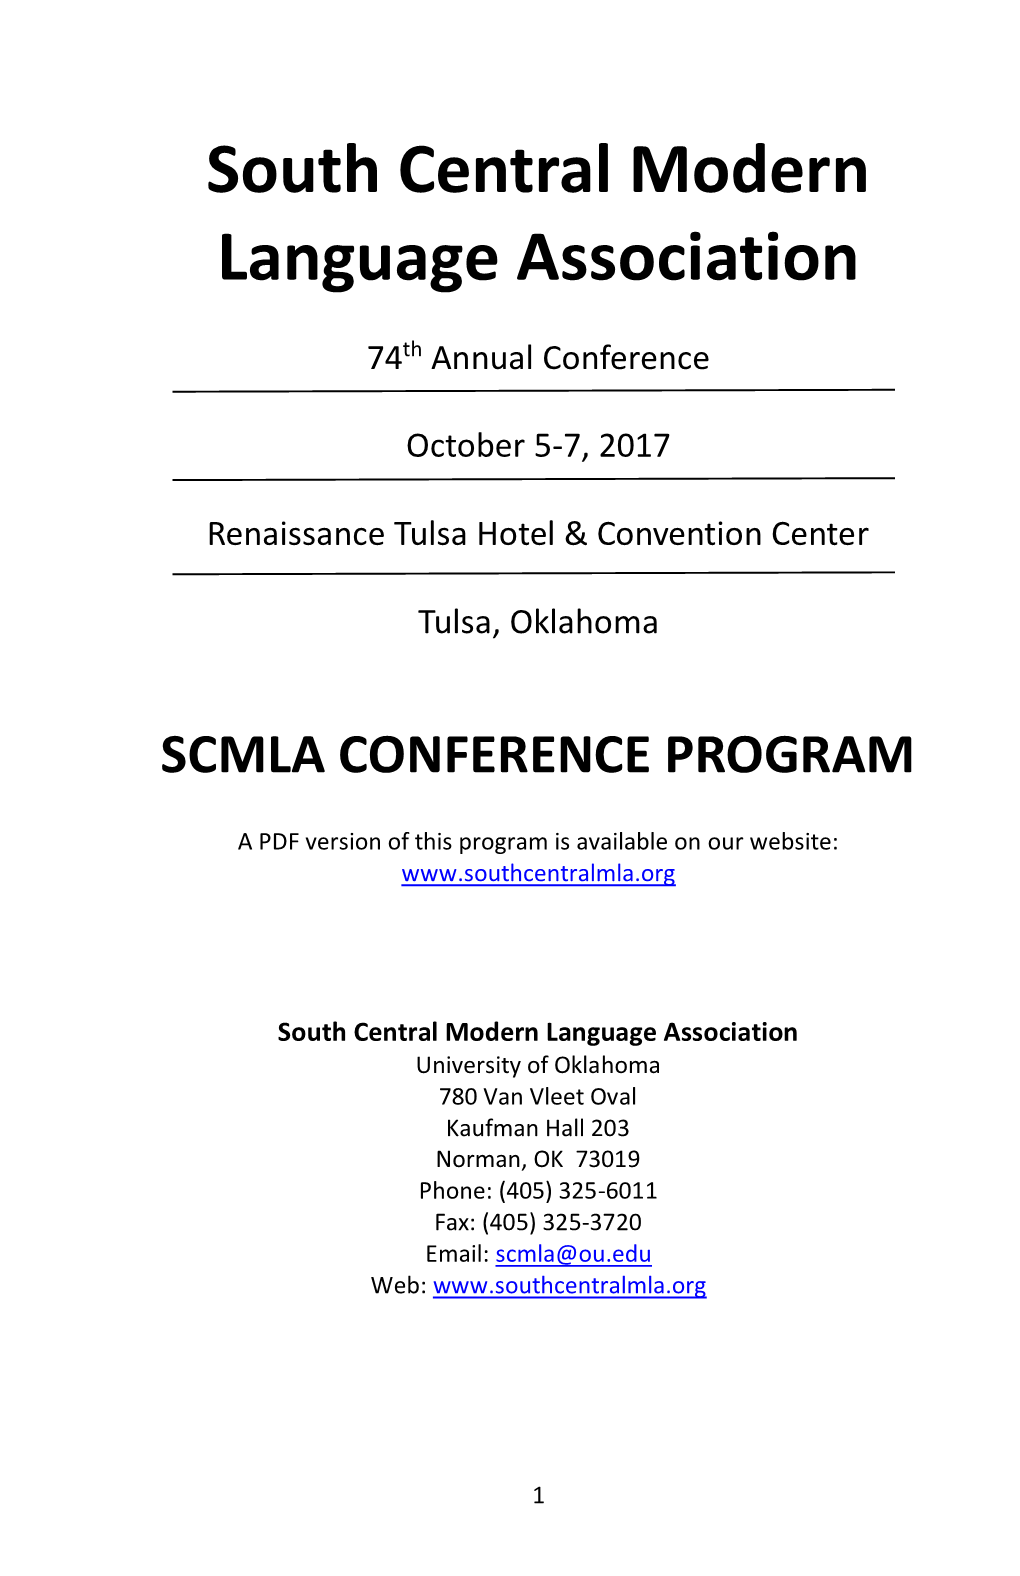 Scmla Conference Program